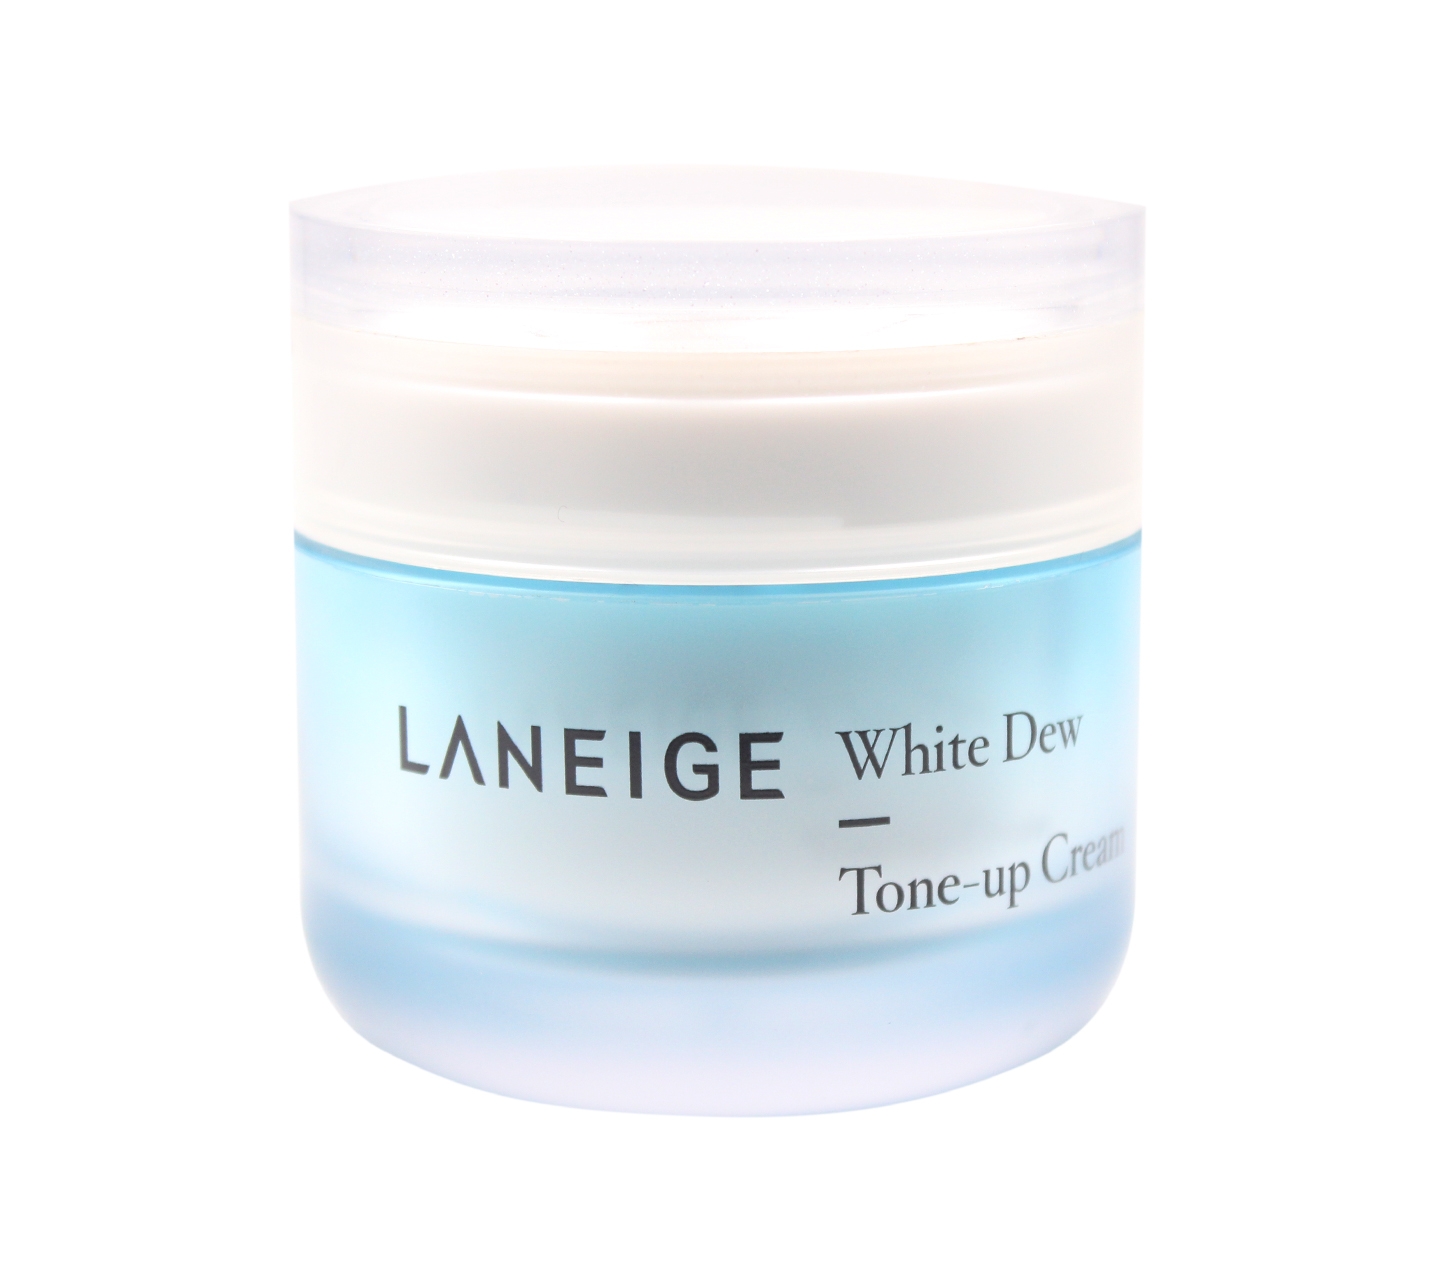 Laneige White Dew Tone-up Cream Skin Care